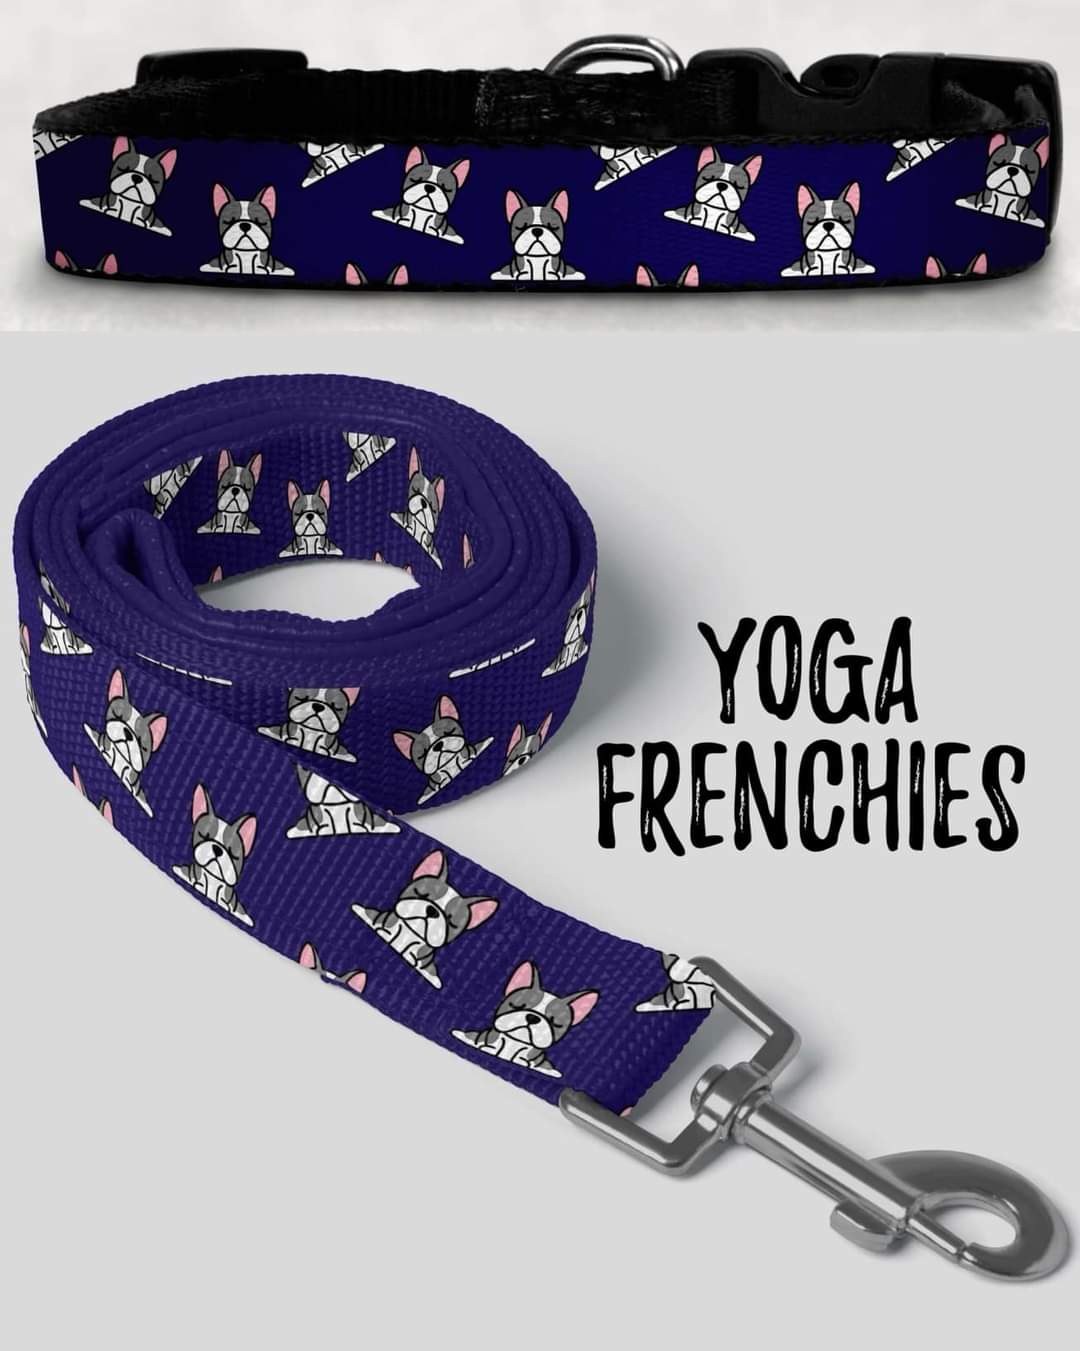 Yoga Frenchies custom leash and collar set